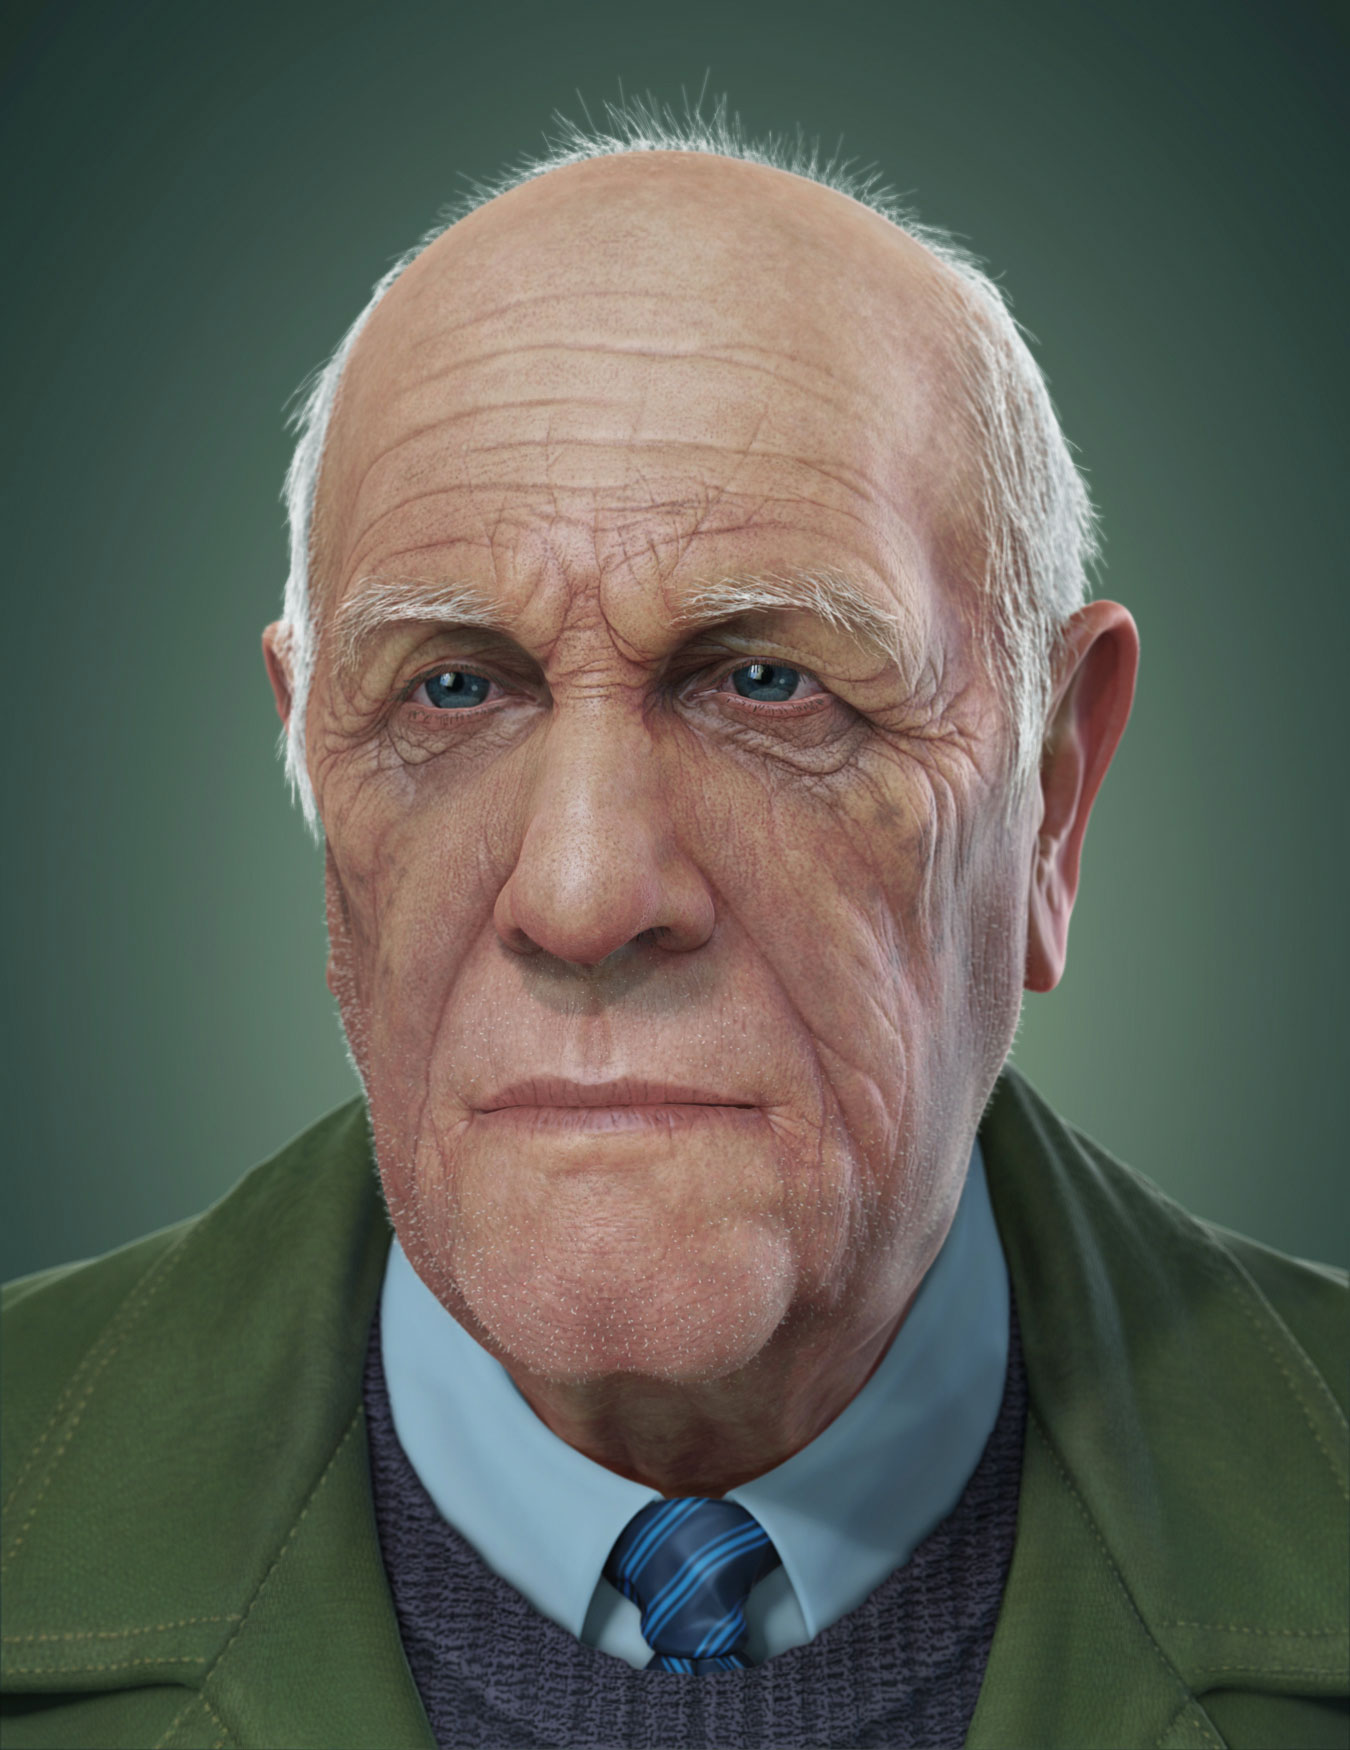 Old man face